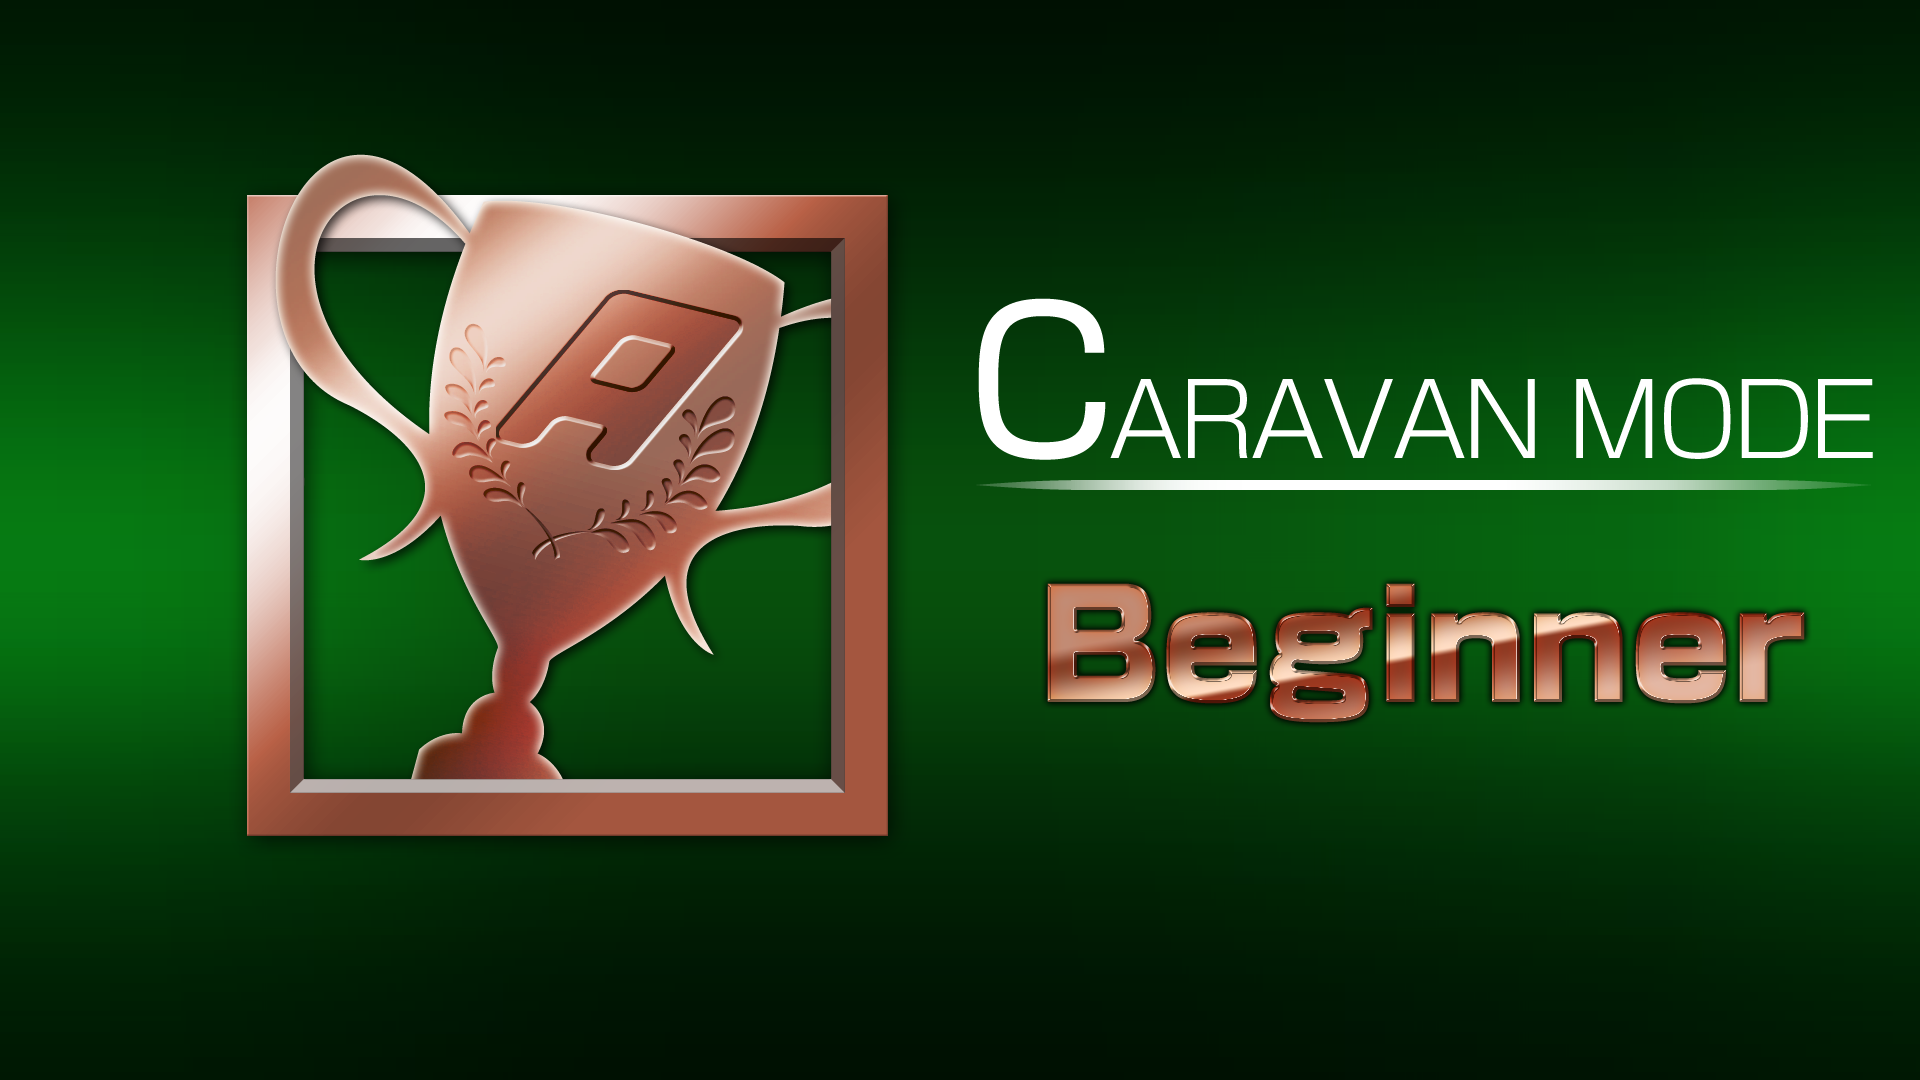 Icon for CARAVAN MODE 2 points